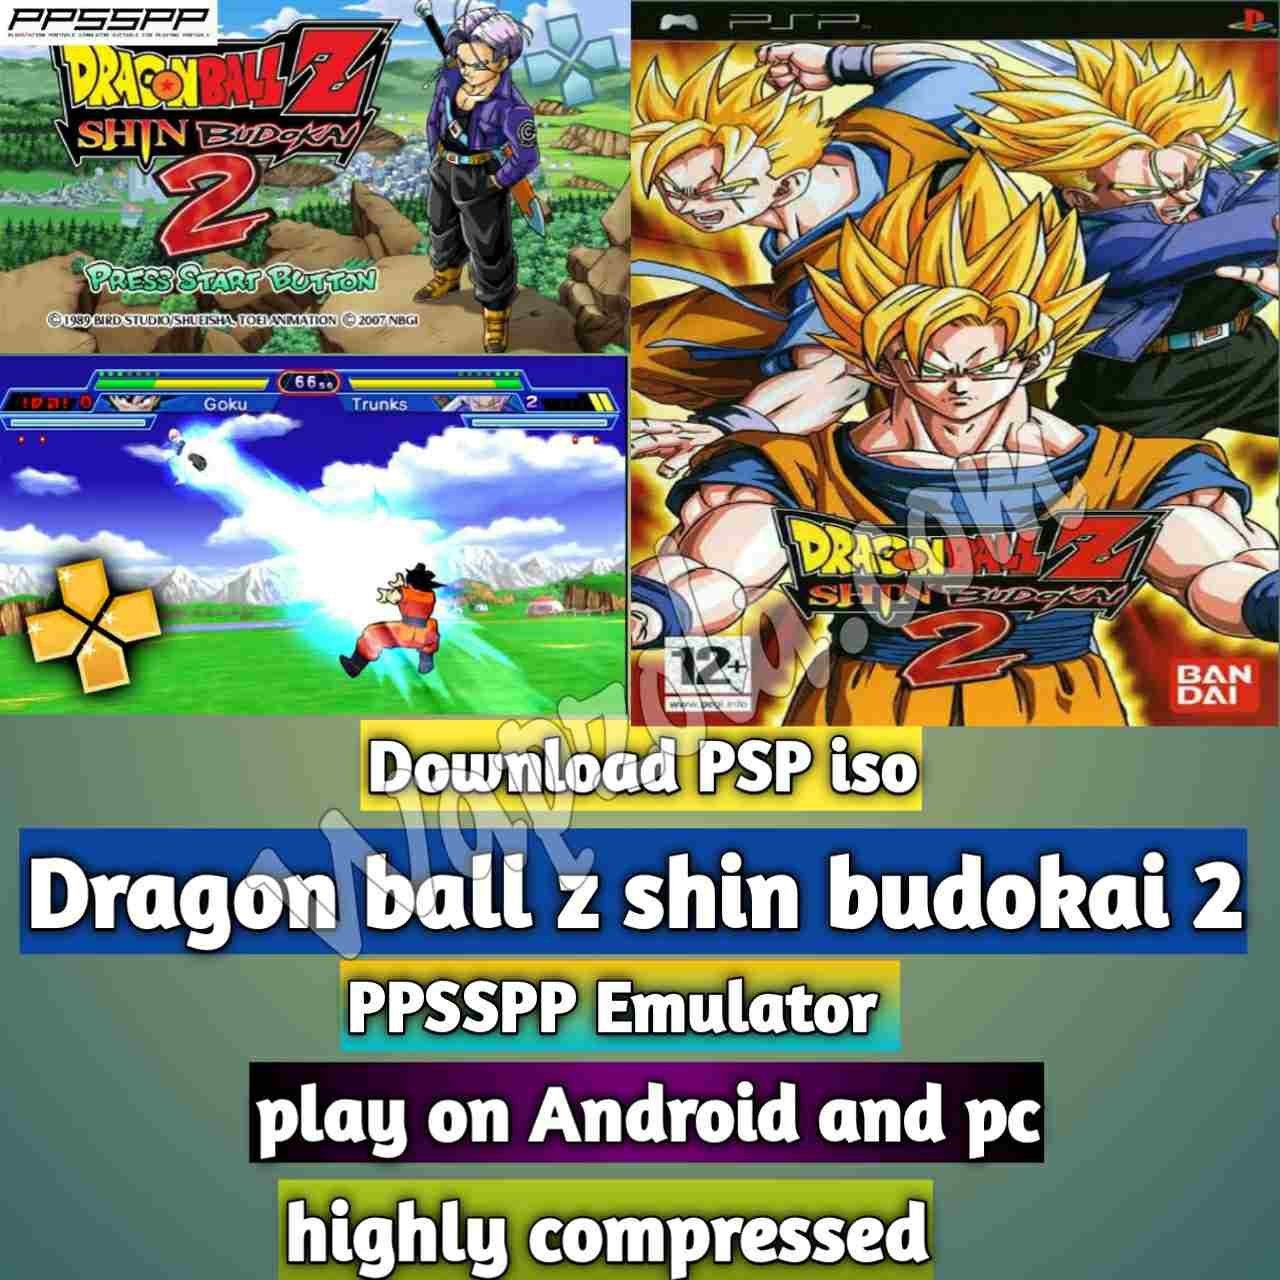 [Télécharger] Dragon ball z shin budokai 2 iso ppsspp emulator - PSP APK Iso ROM hautement compressé 300MB 1